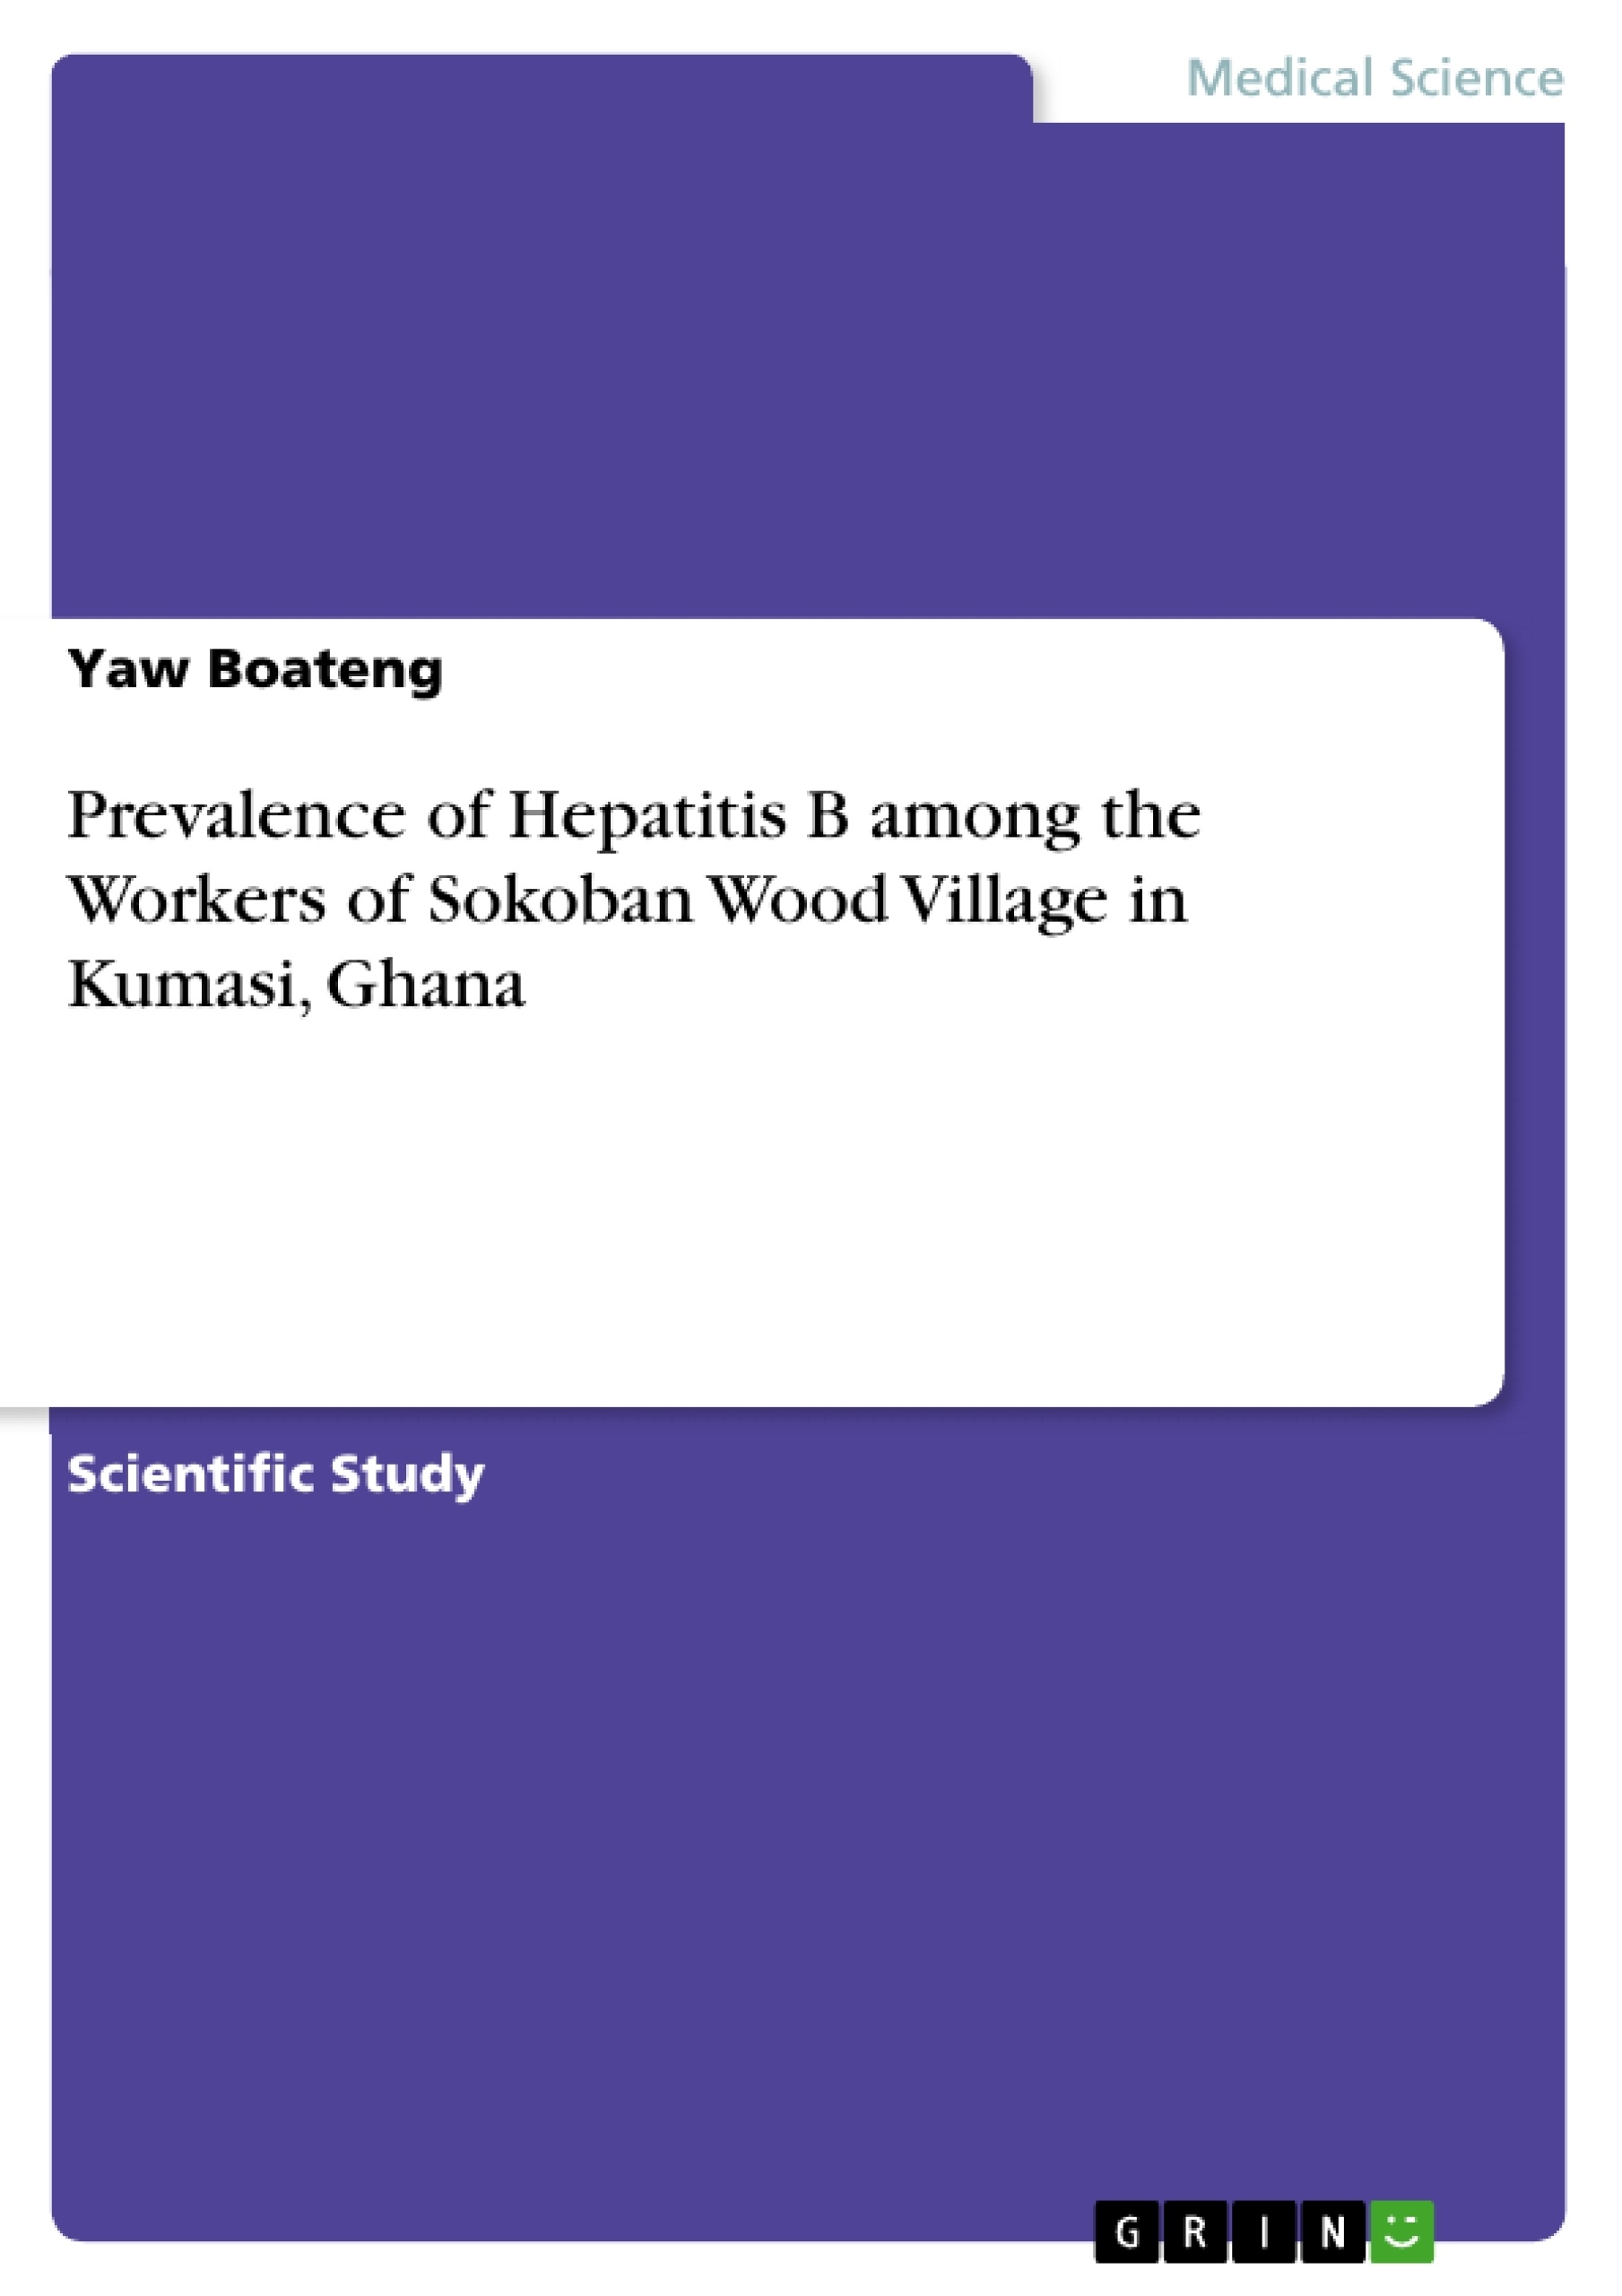 Title: Prevalence of Hepatitis B among the Workers of Sokoban Wood Village in Kumasi, Ghana